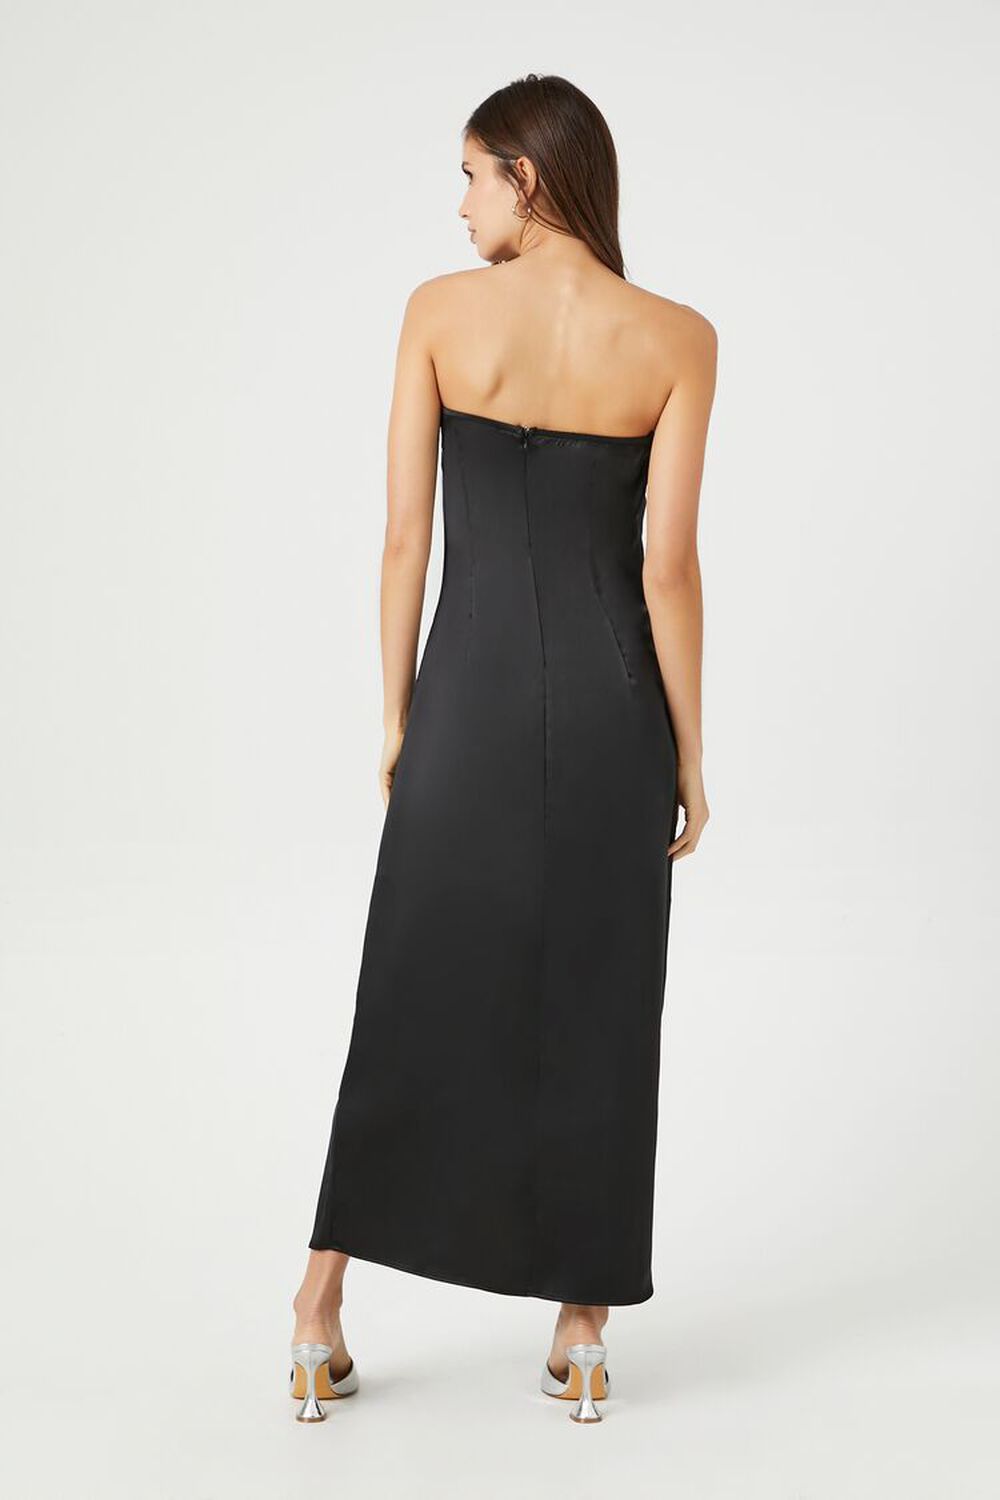 Black Strapless Dress - Rhinestone Dress - Satin Maxi Slip Dress